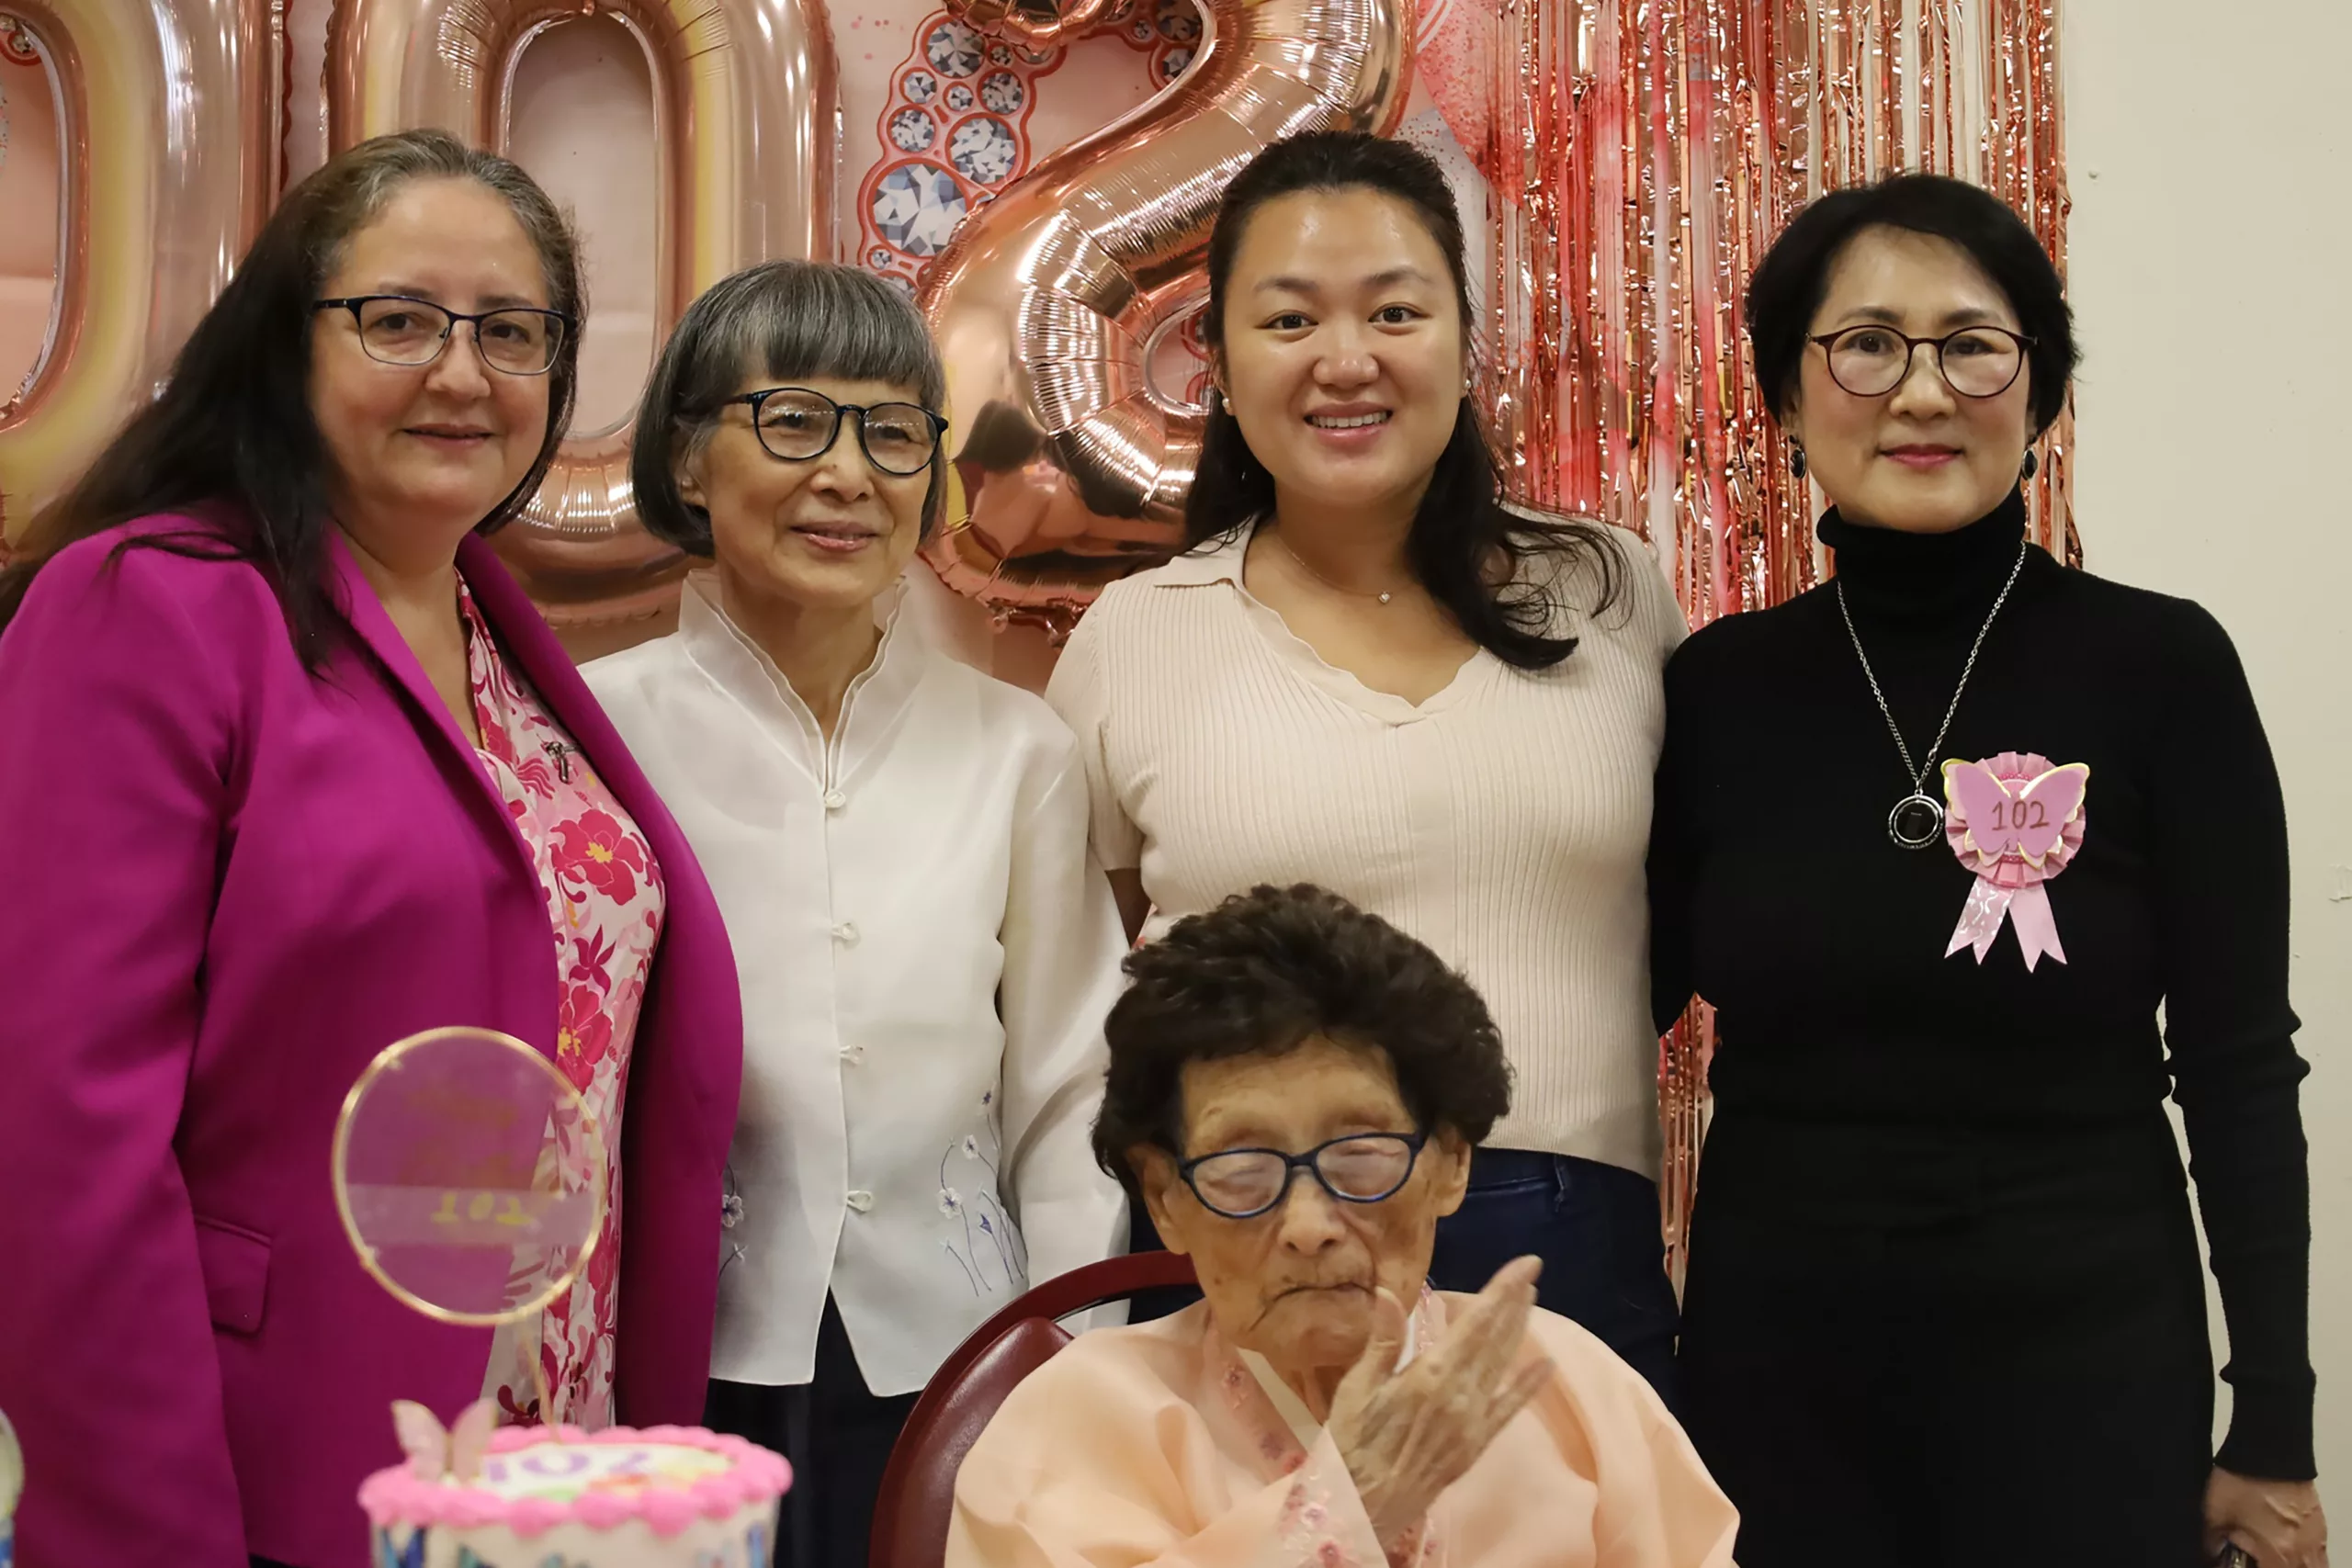 SCS Hosts Birthday Bash for 102-Year-Old Sunnyside Resident